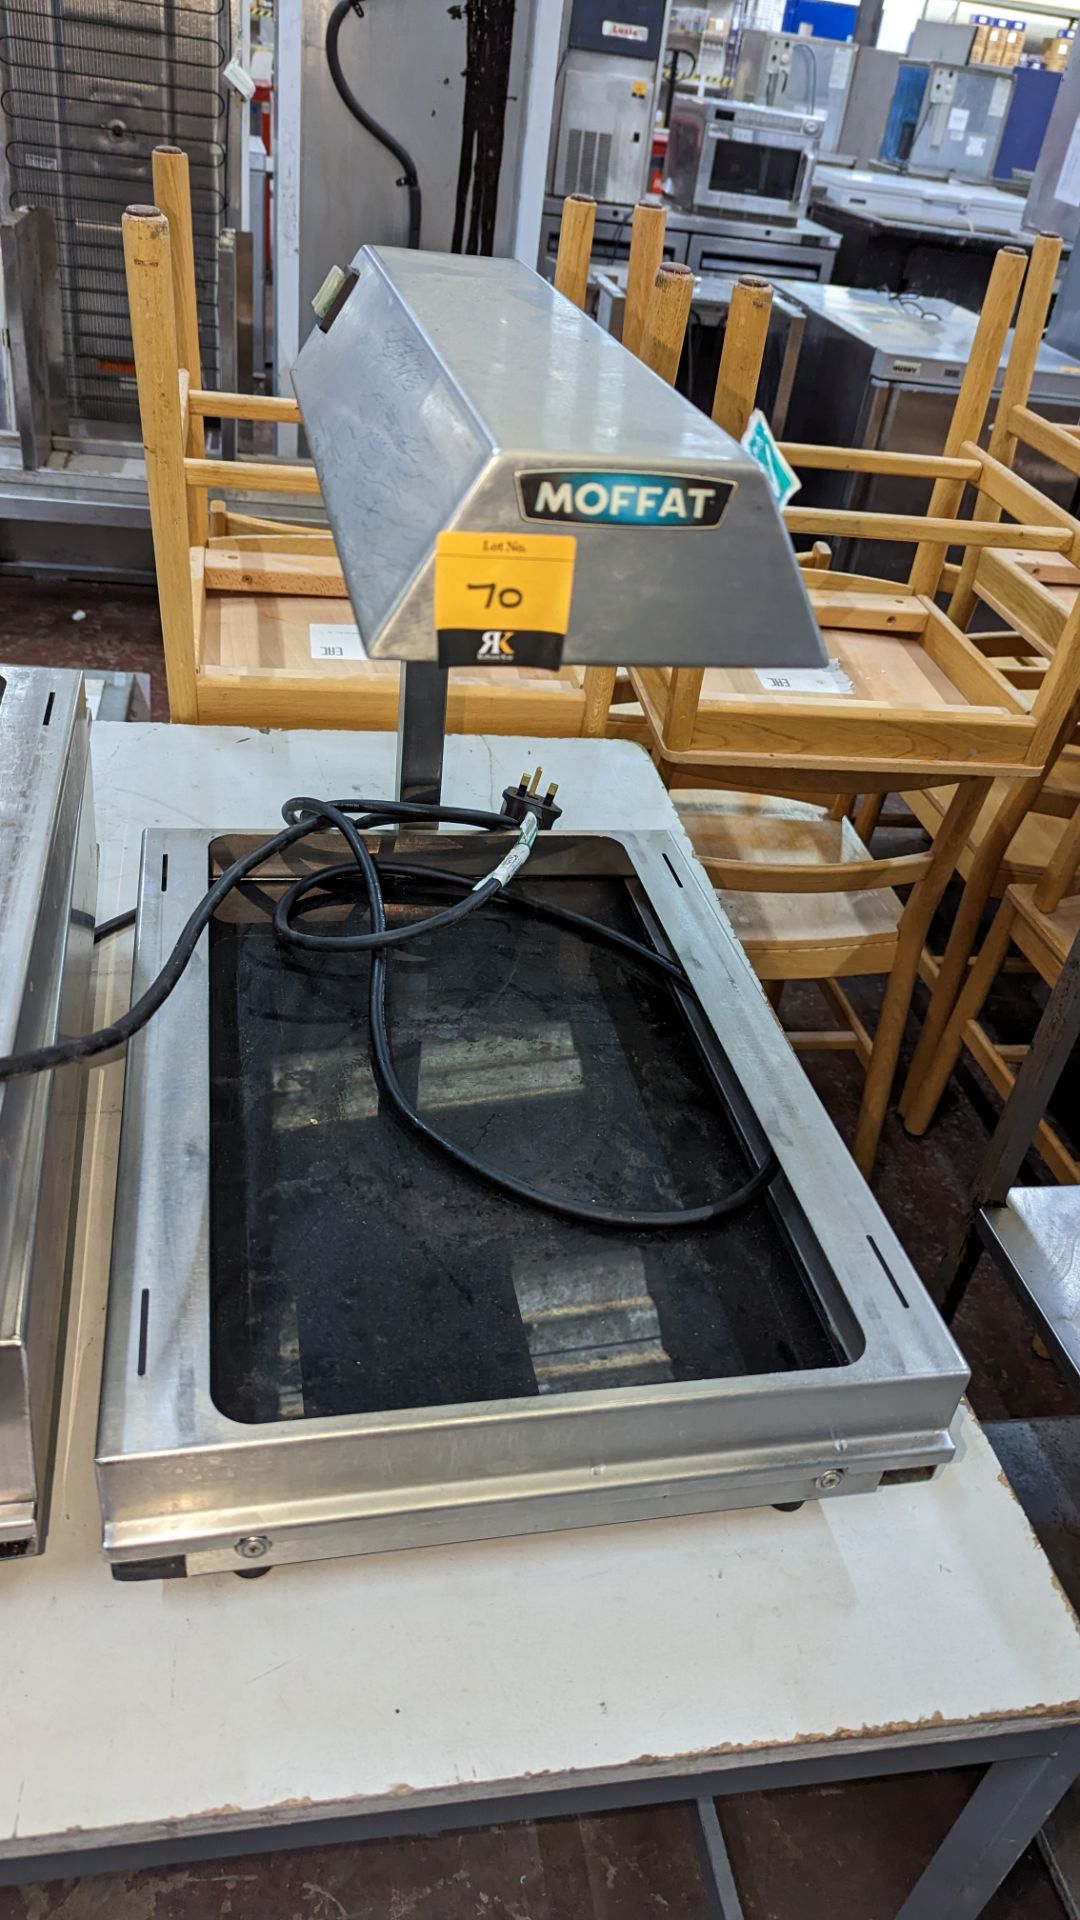 Moffat benchtop warming unit - Image 2 of 4